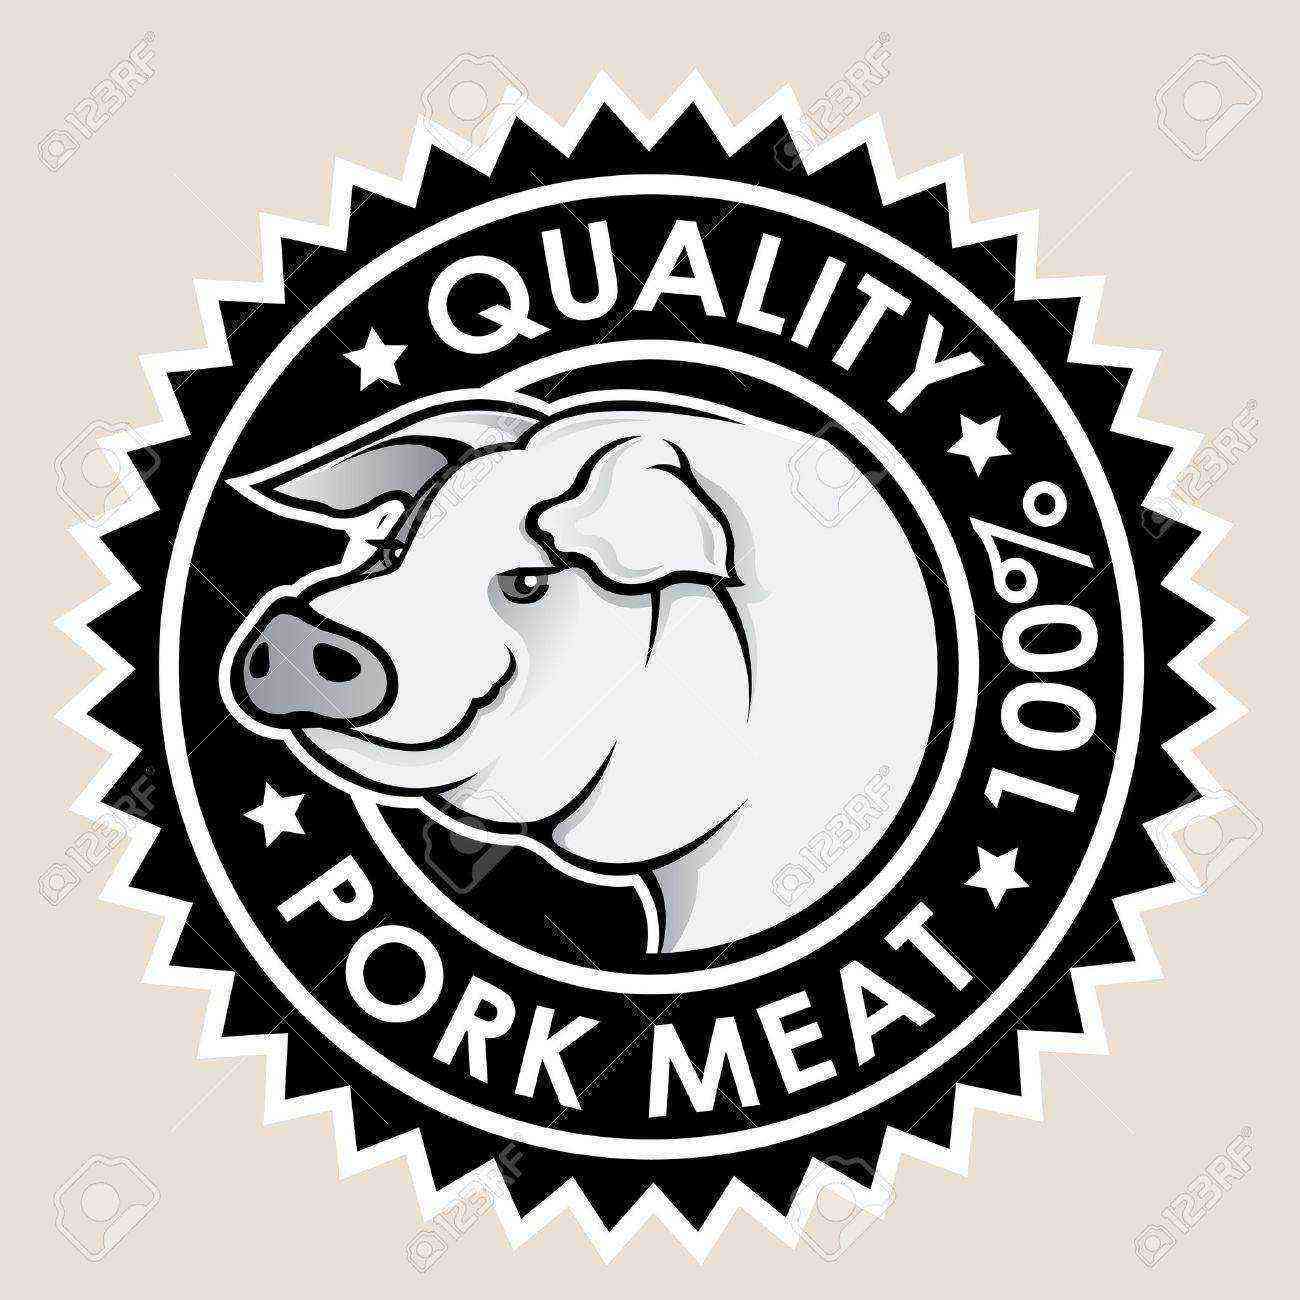 Kvalita vepřového masa